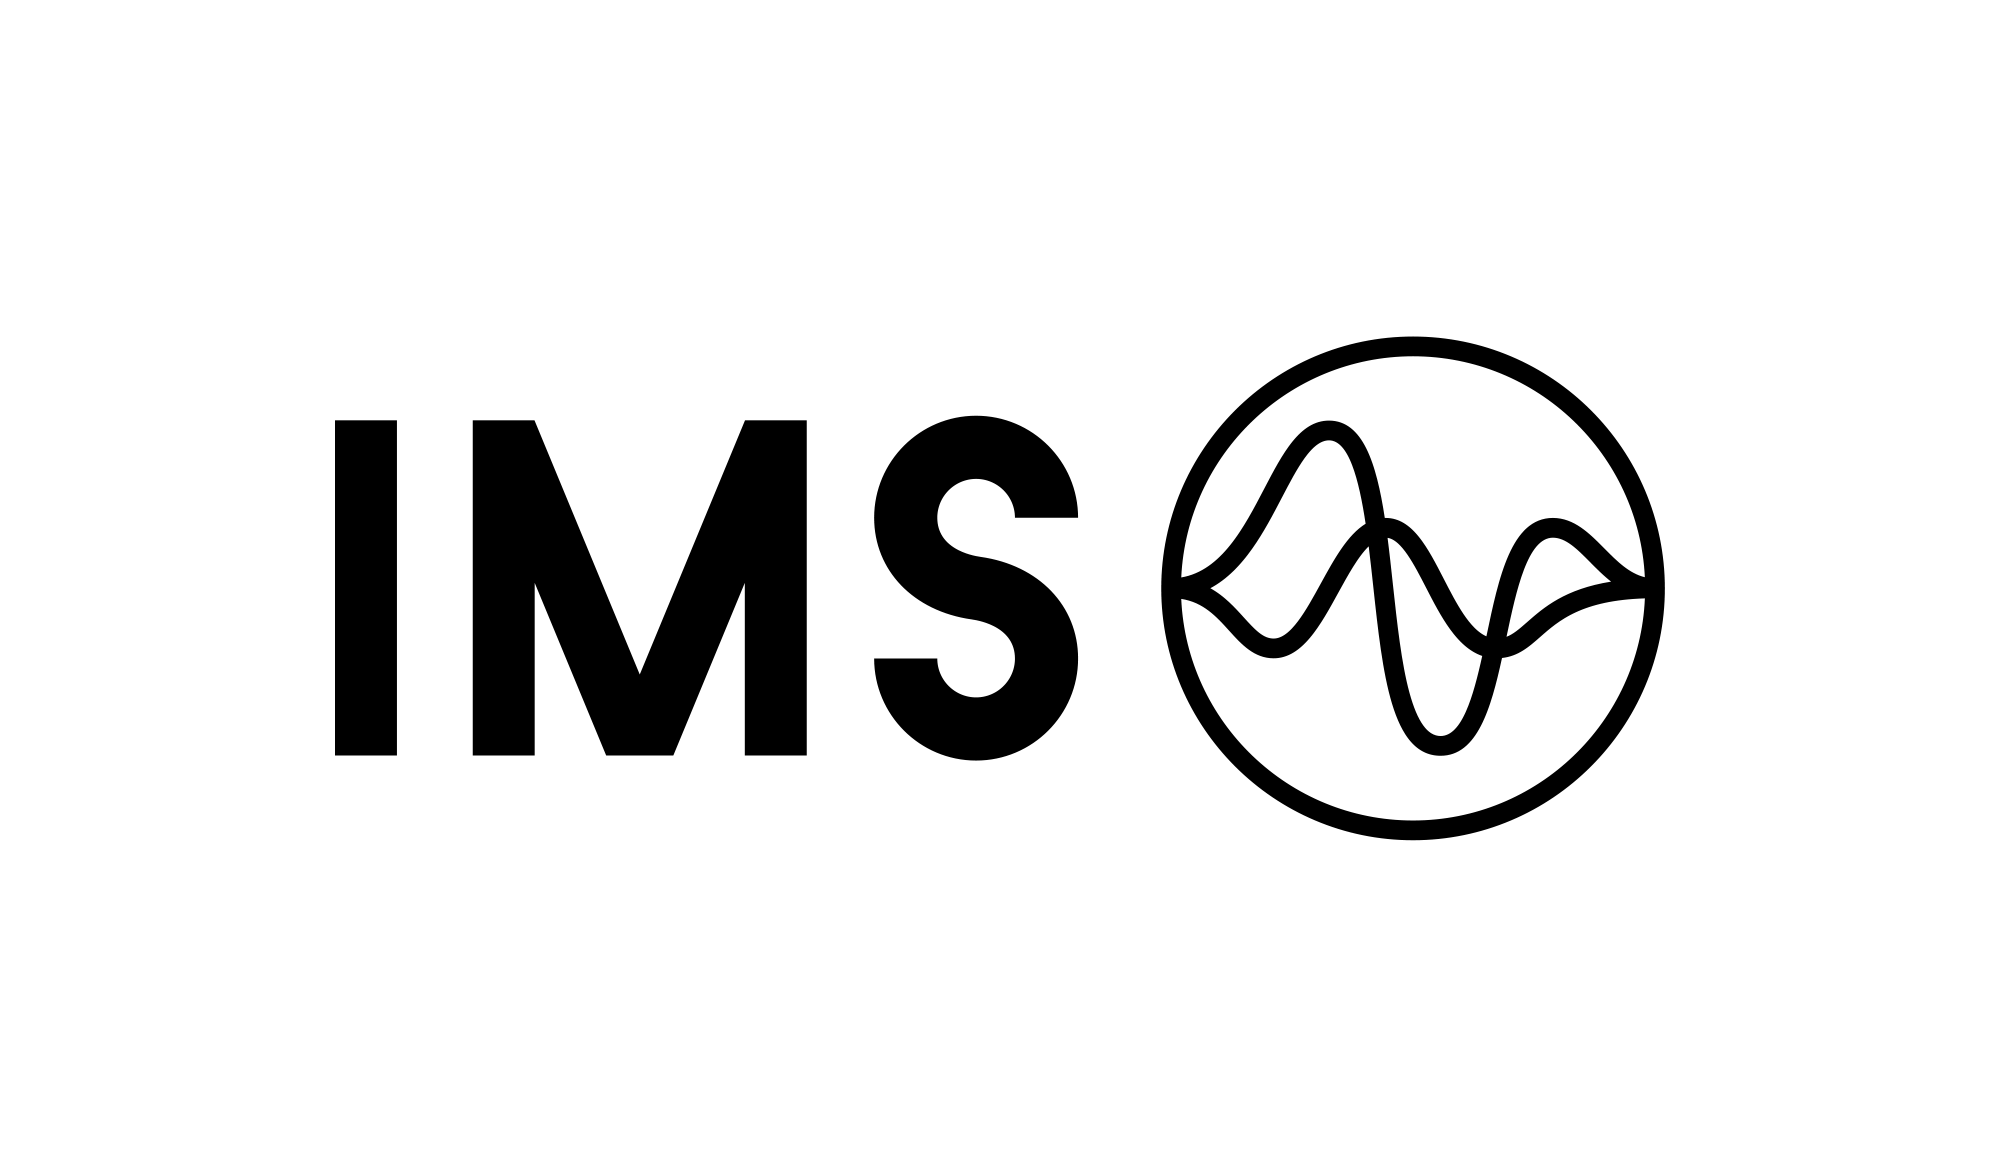 Logo: International Media Support (IMS)